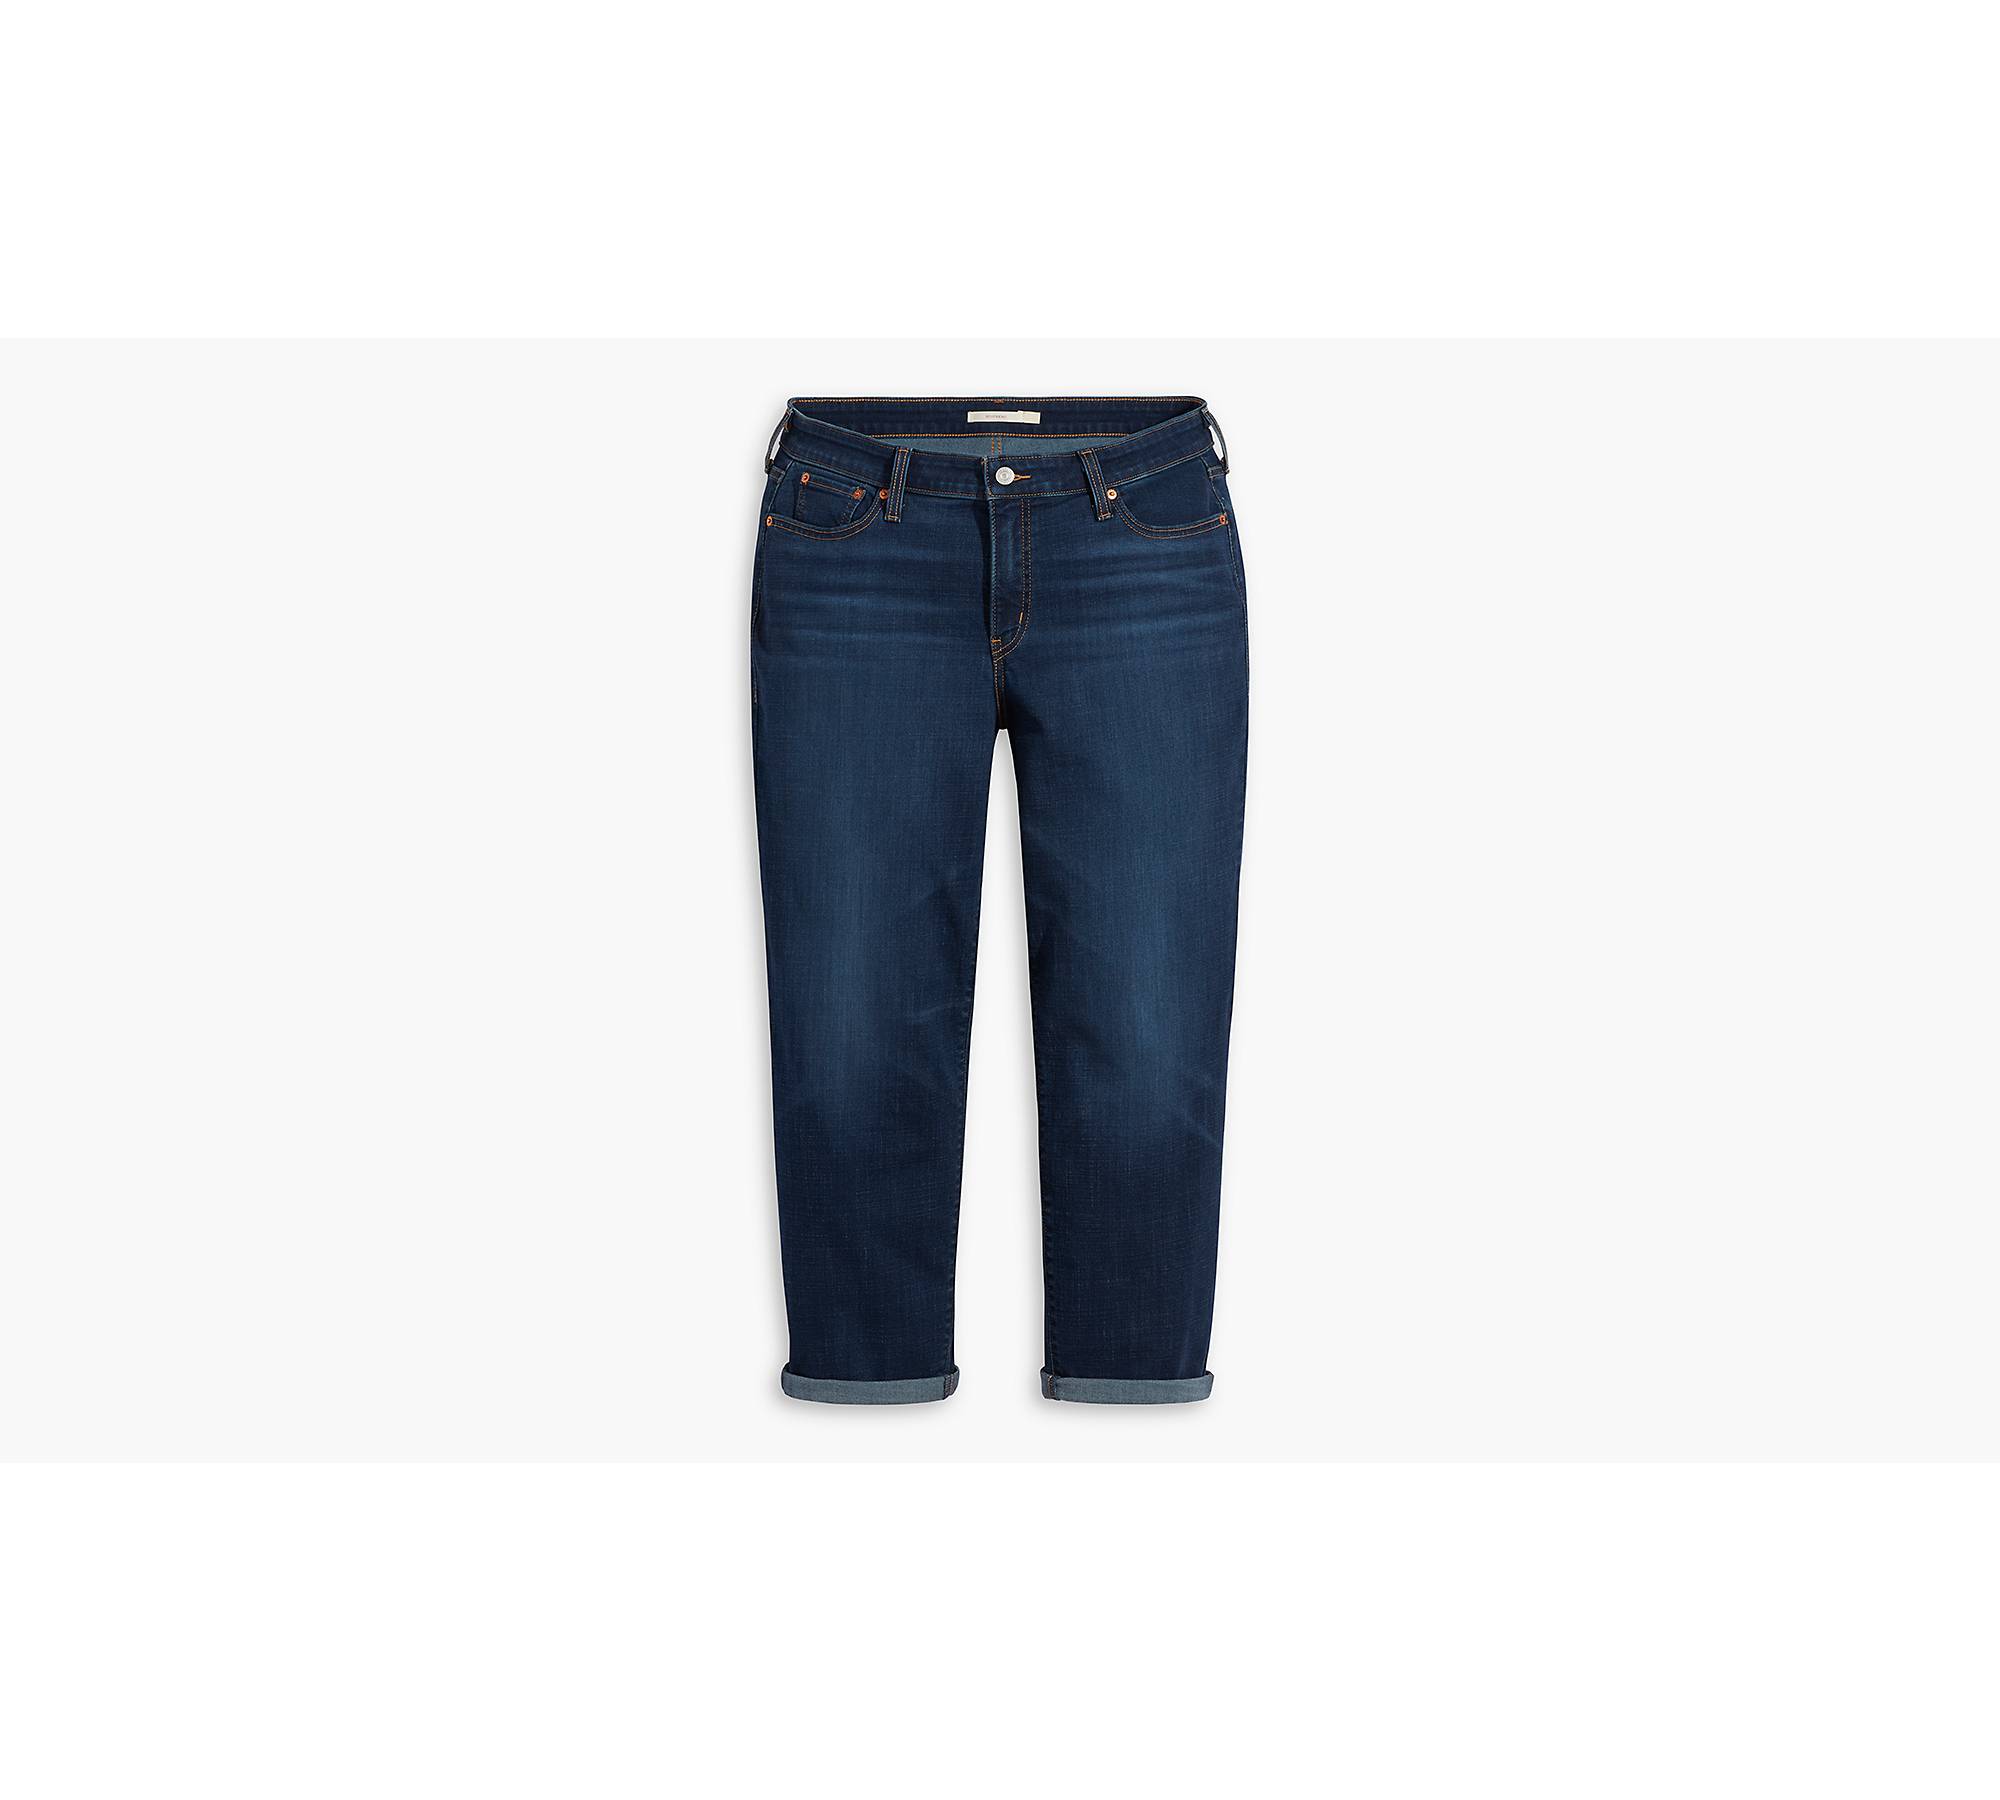 Earl Jeans Womens Plus Size 20 W Dark Wash Capris